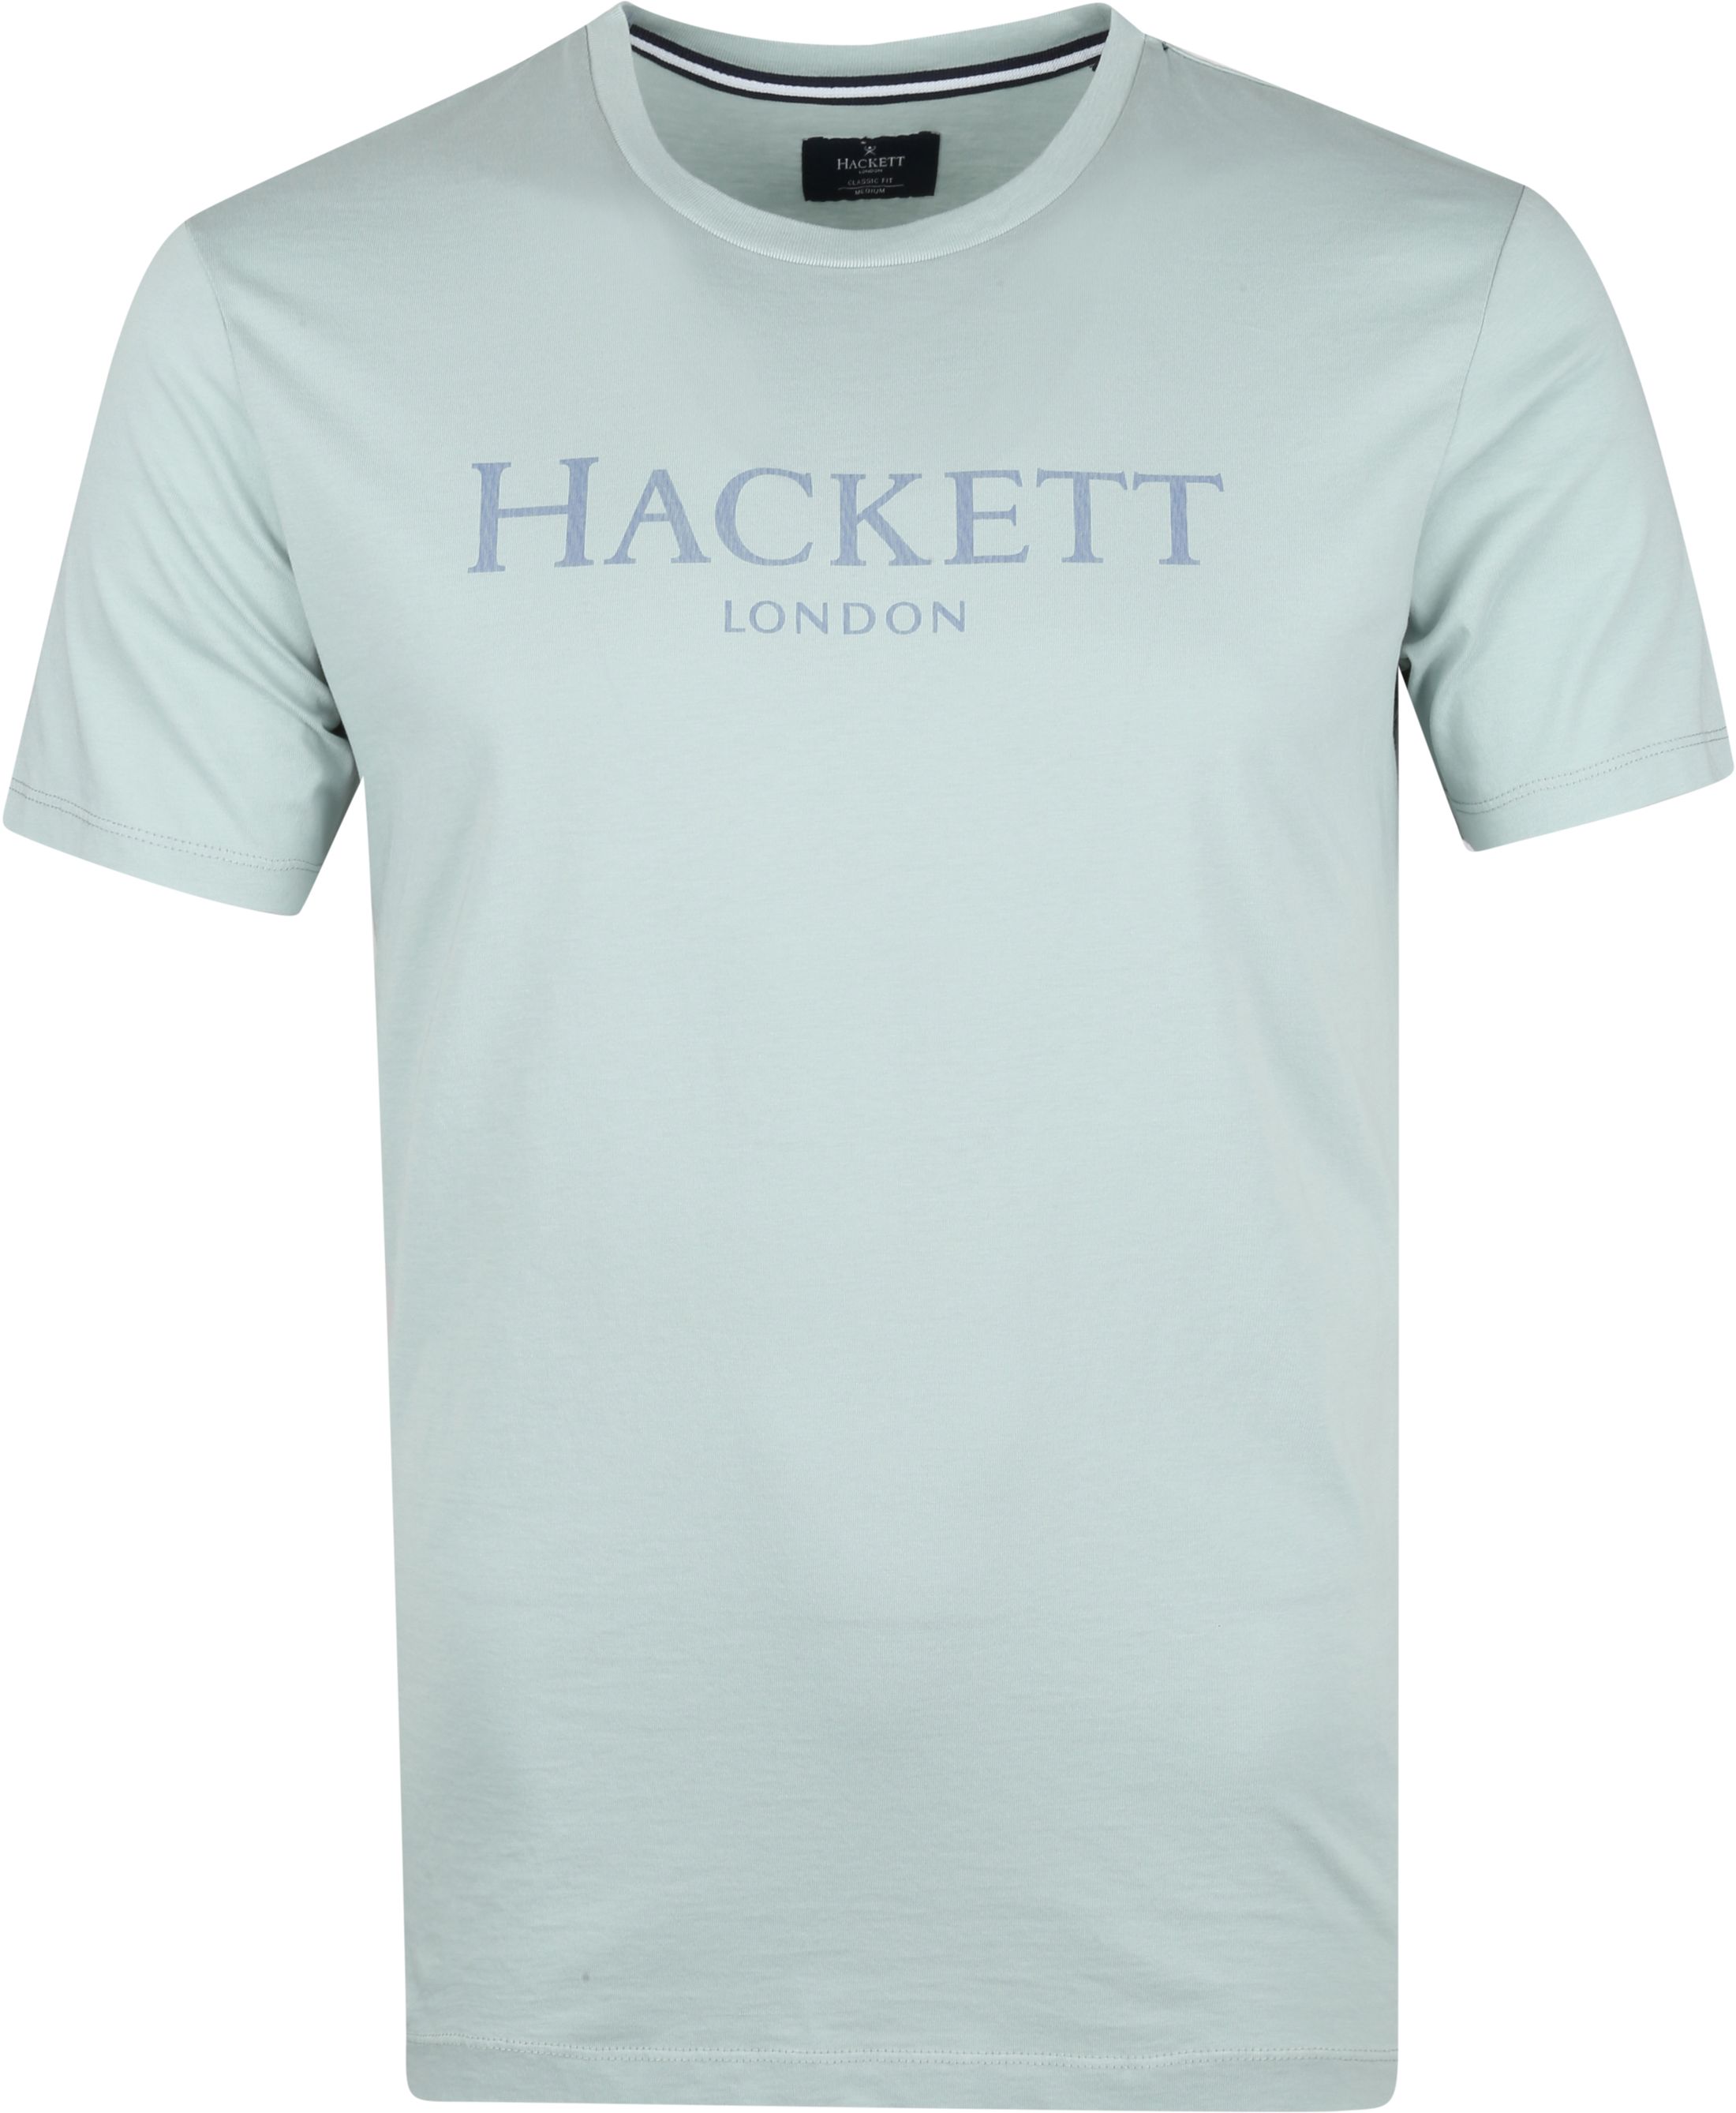 Hackett T-shirt Logo Green size L